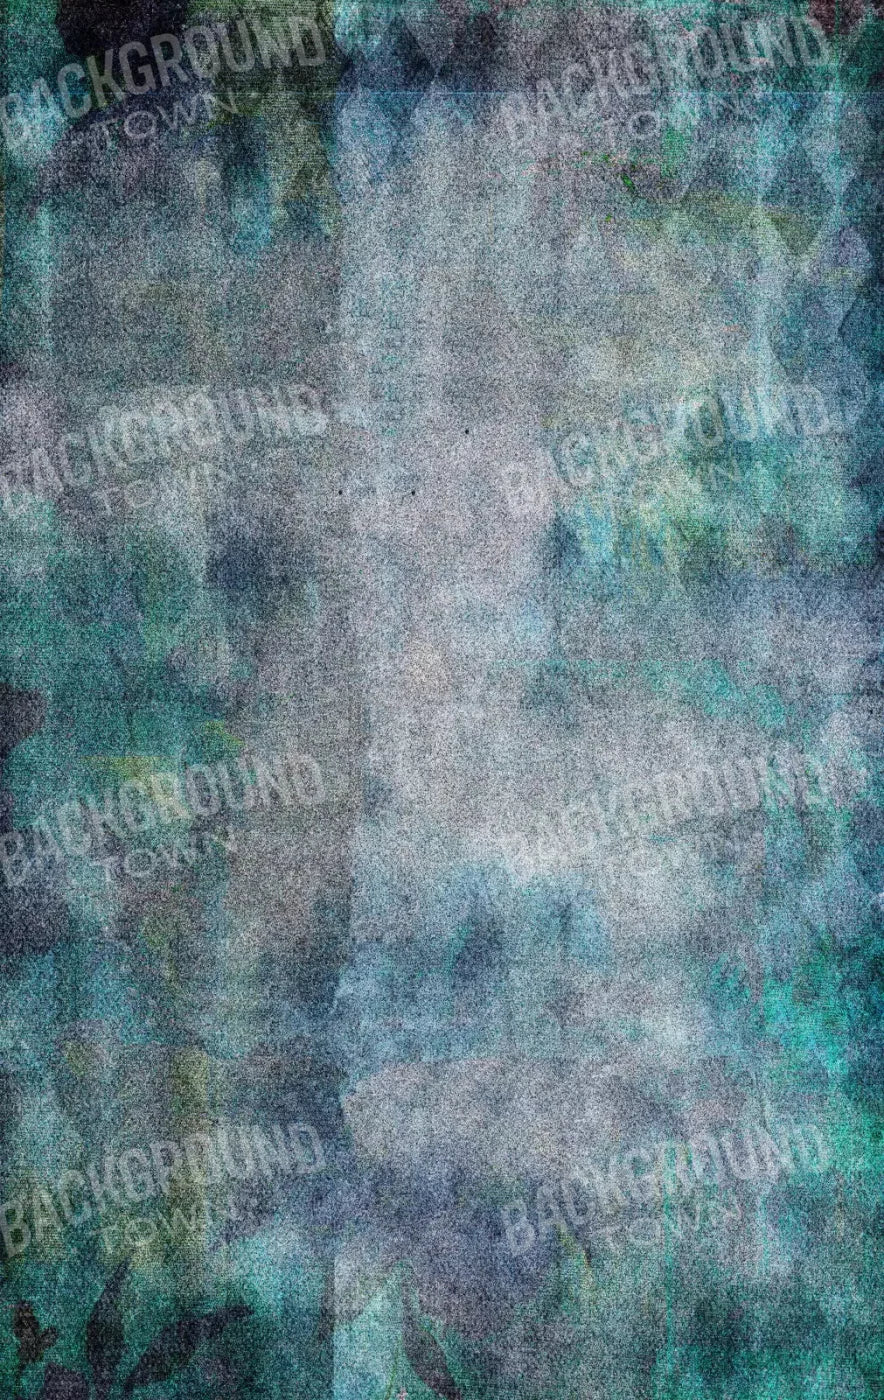 Carnival 10X16 Ultracloth ( 120 X 192 Inch ) Backdrop